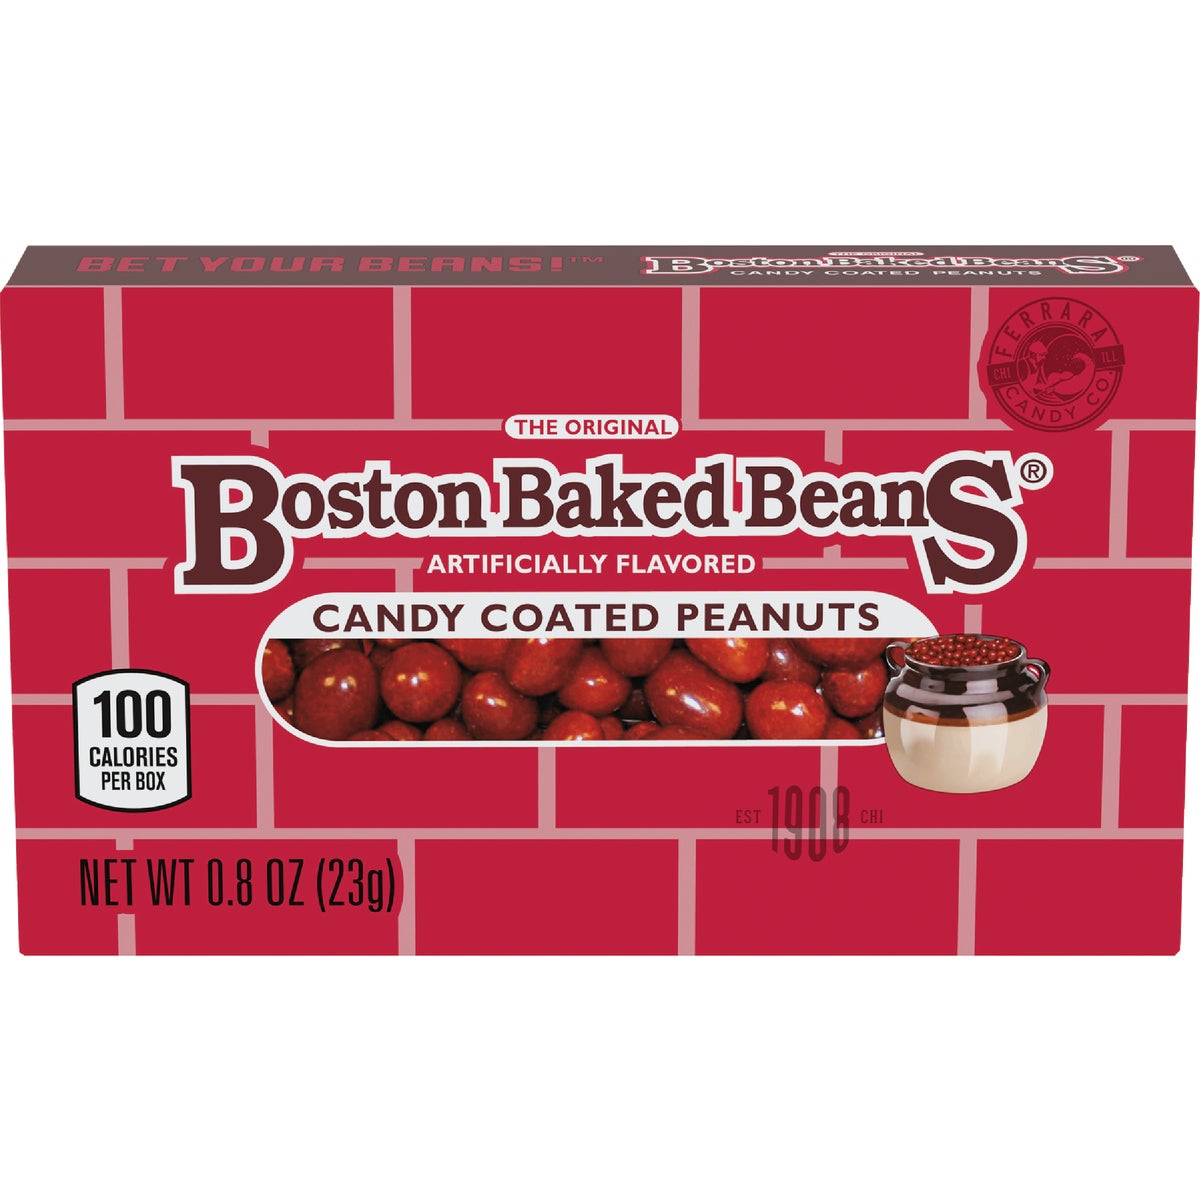 Ferrara Pan 123094 Ferrara Pan Candy Covered Peanuts 0.8 Oz. Boston Baked Beans 123094 Pack of 24